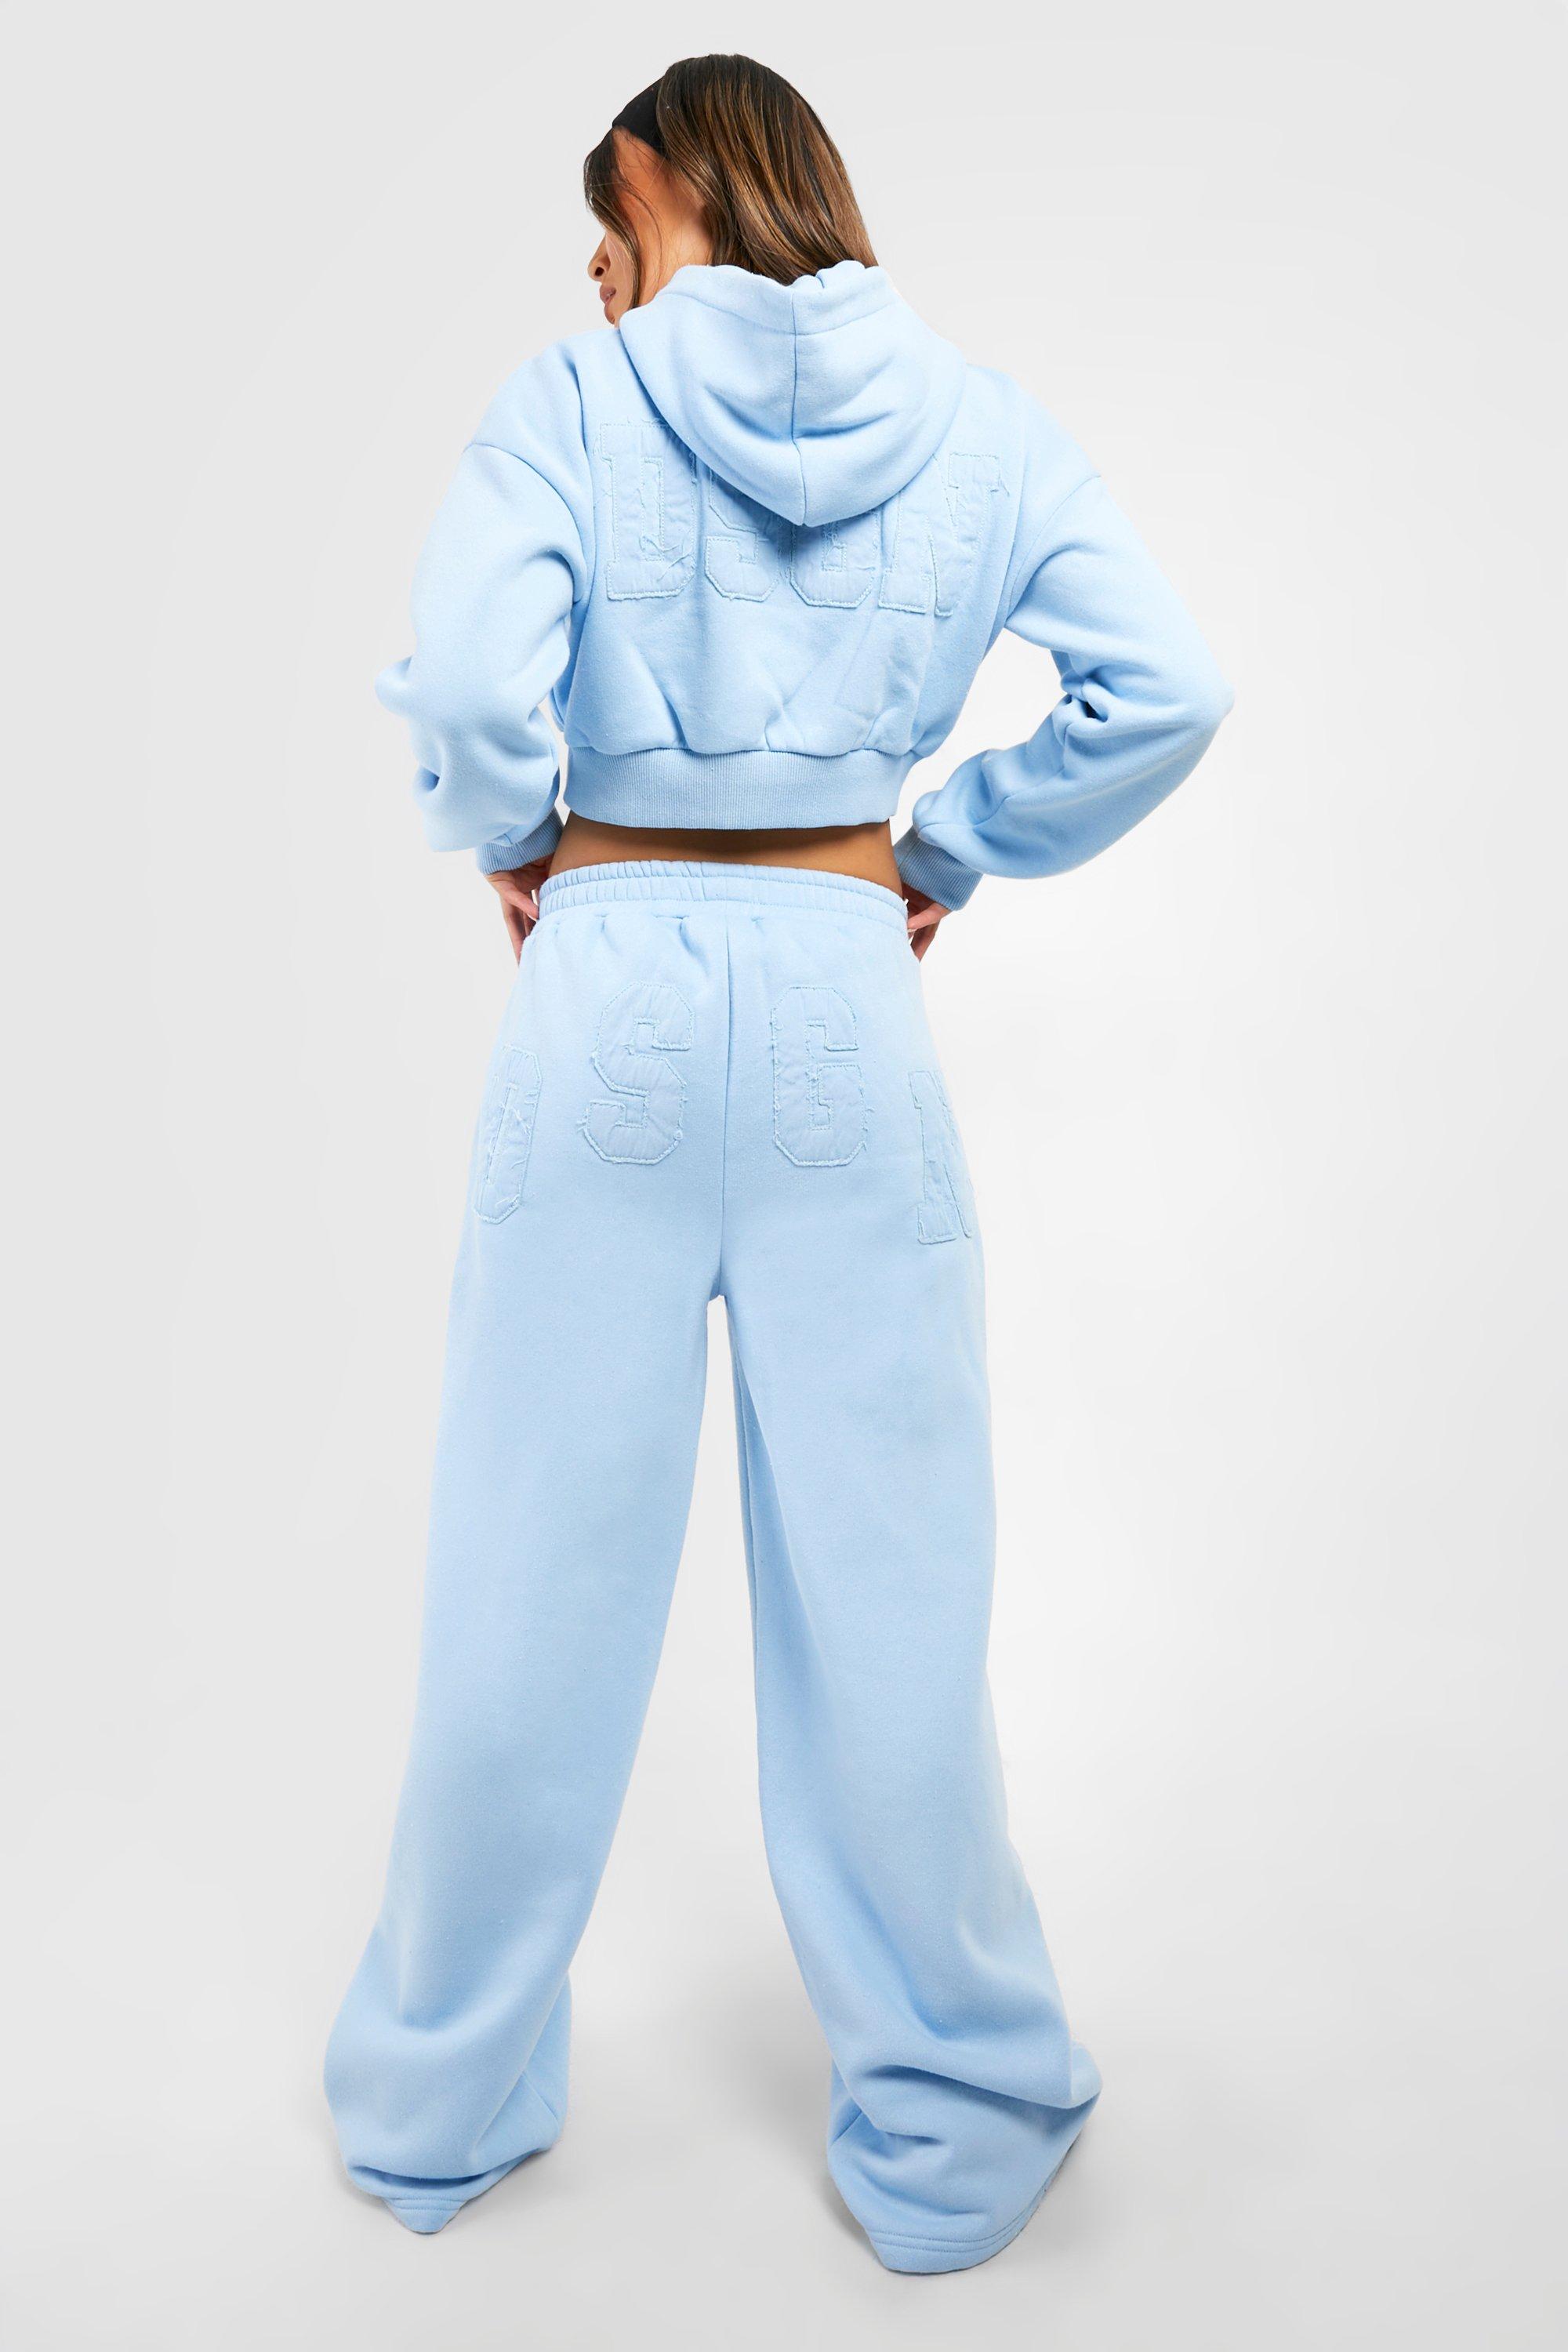 Image of Dsgn Studio Self Fabric Applique Hooded Tracksuit, Azzurro